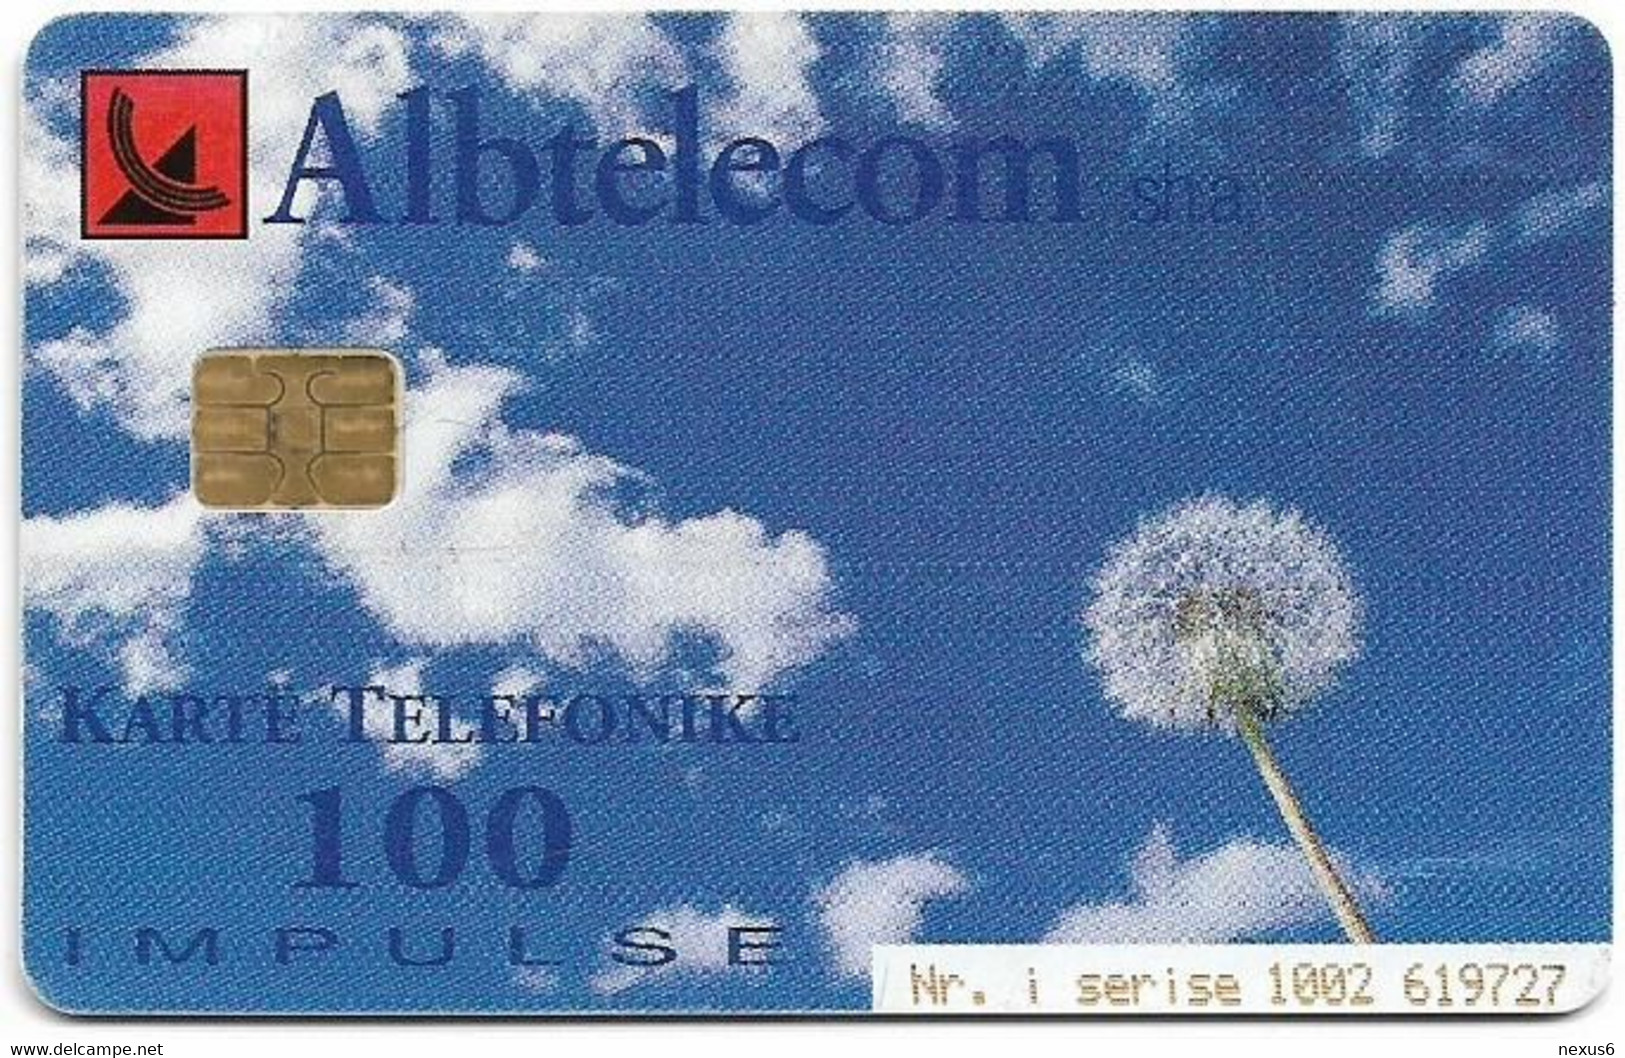 Albania - Albtelecom - Poppy Seeds - ALB-70, 09.2001, 100Units, 85.000ex, Used - Albania